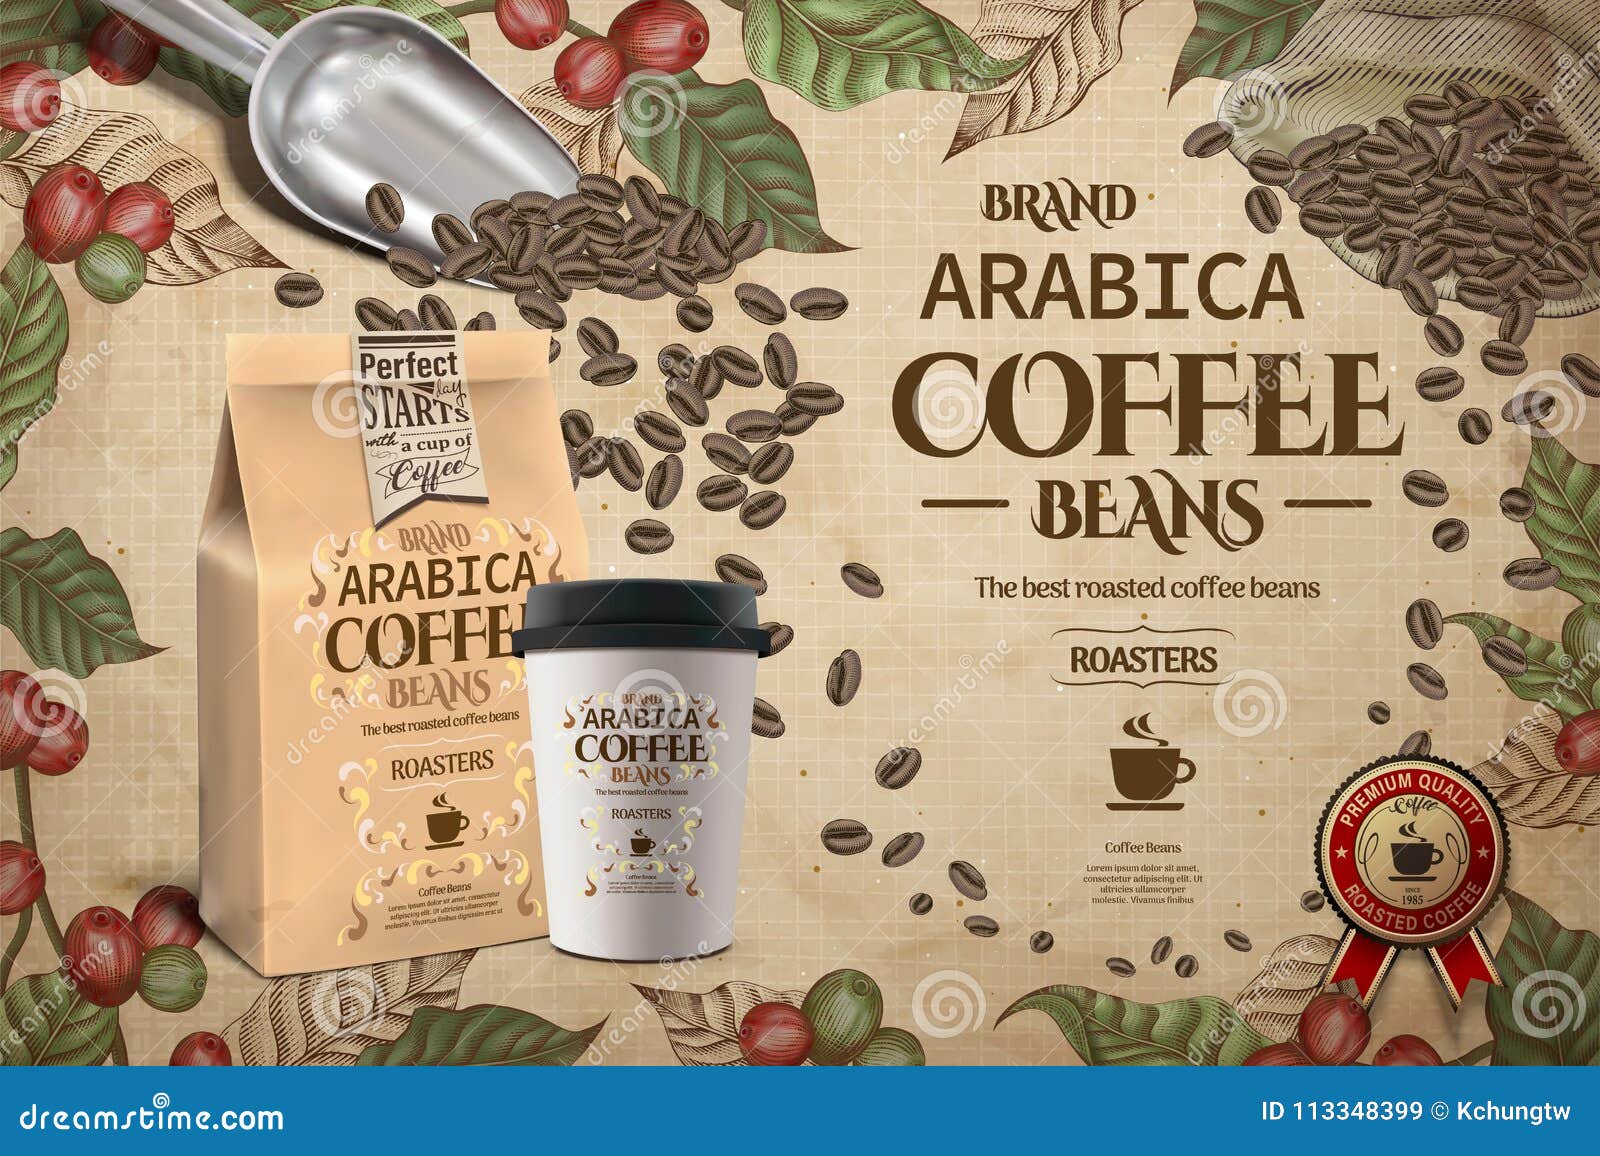 elegant arabica coffee beans ads